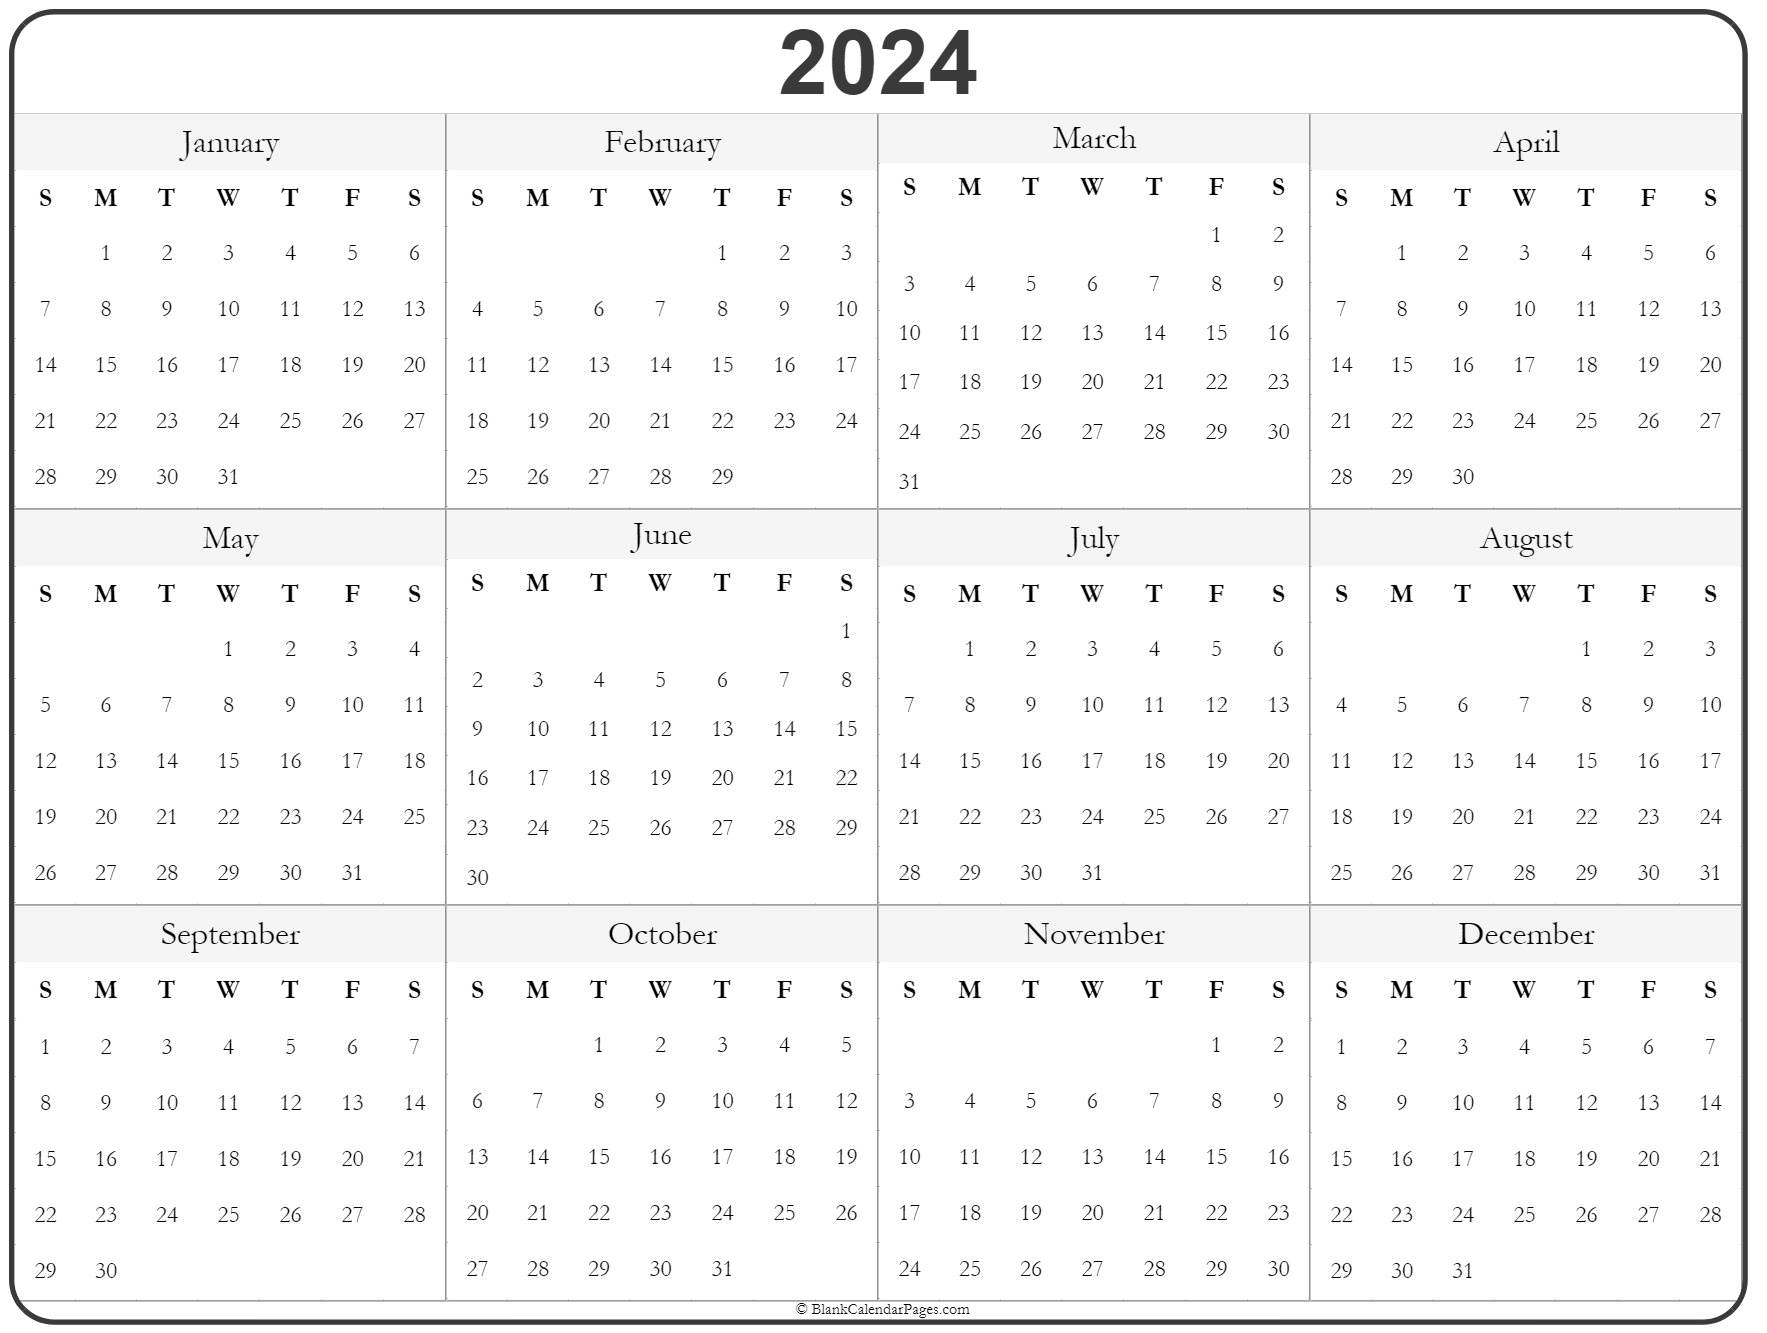 2024 Calendar Printable Cute Free 2024 Yearly Calendar Templates - Free Printable 2024 Yearly Calendar Cute